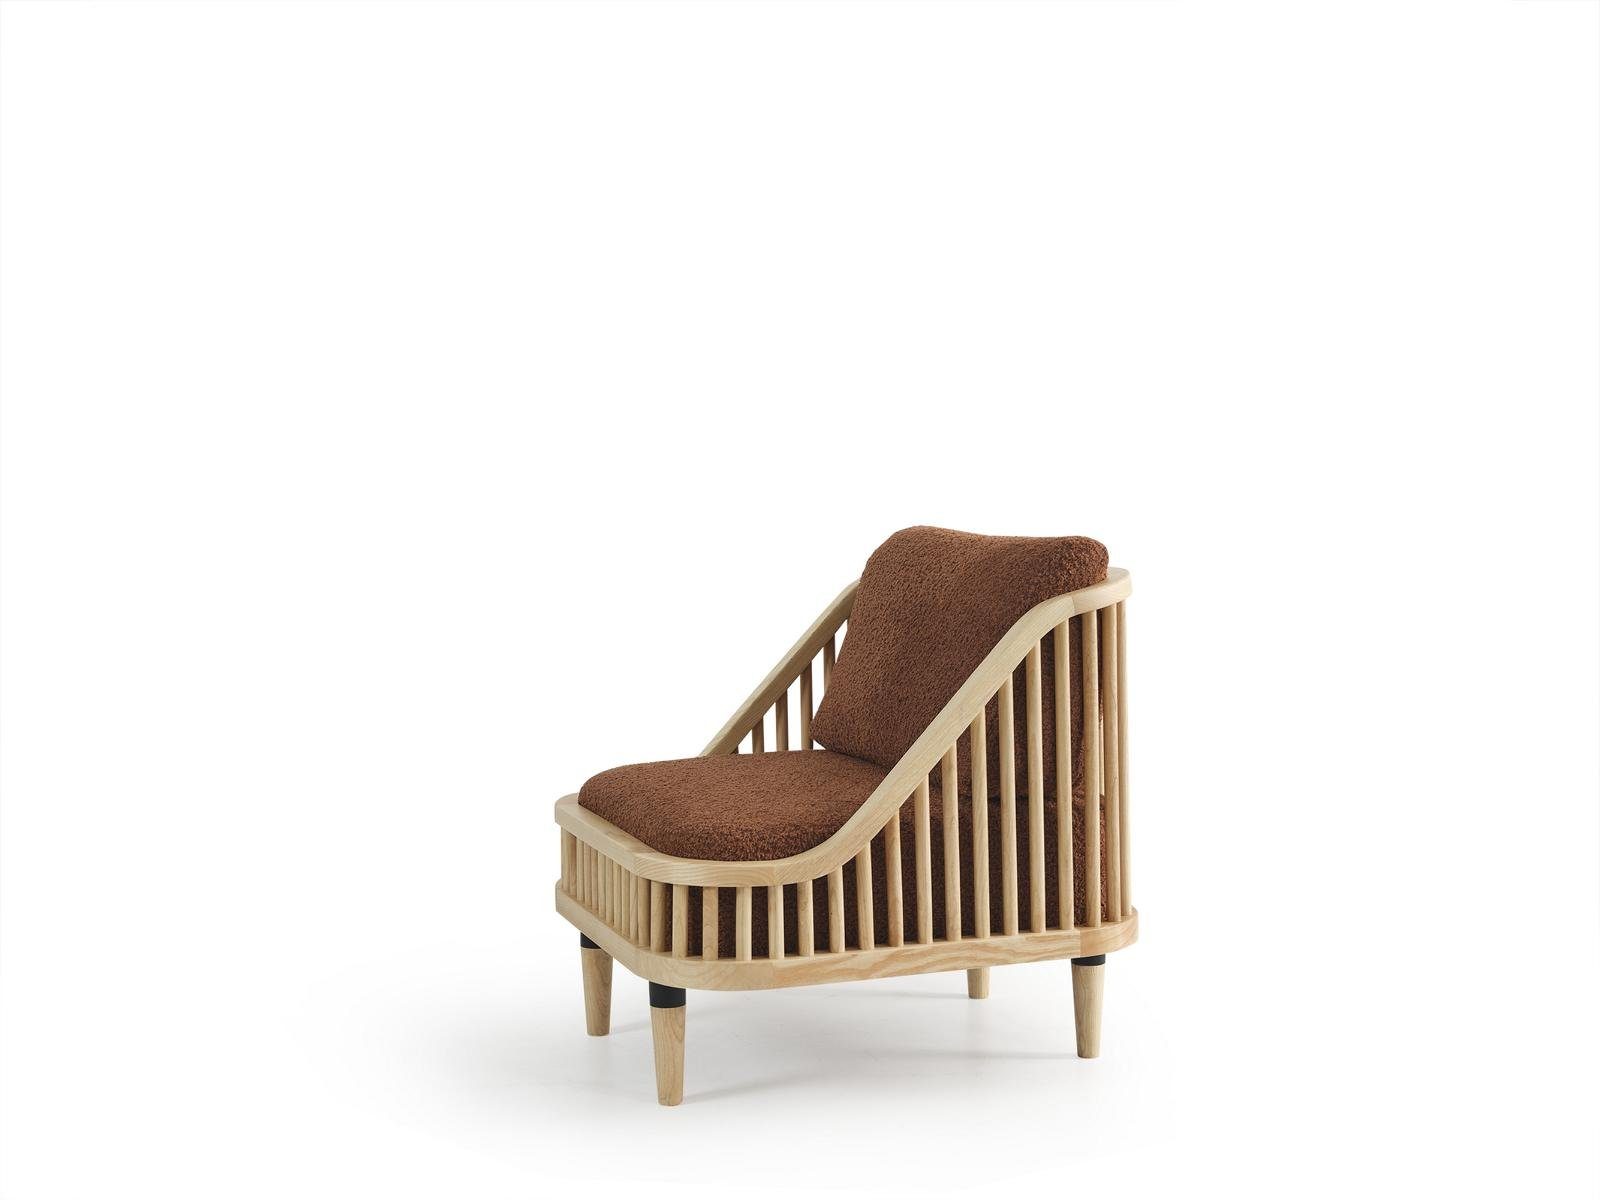 JVmoebel Sessel Holz Sessel Wohnzimmer Made (Sessel), Möbel Europe Lehnstühle Polster Neu in